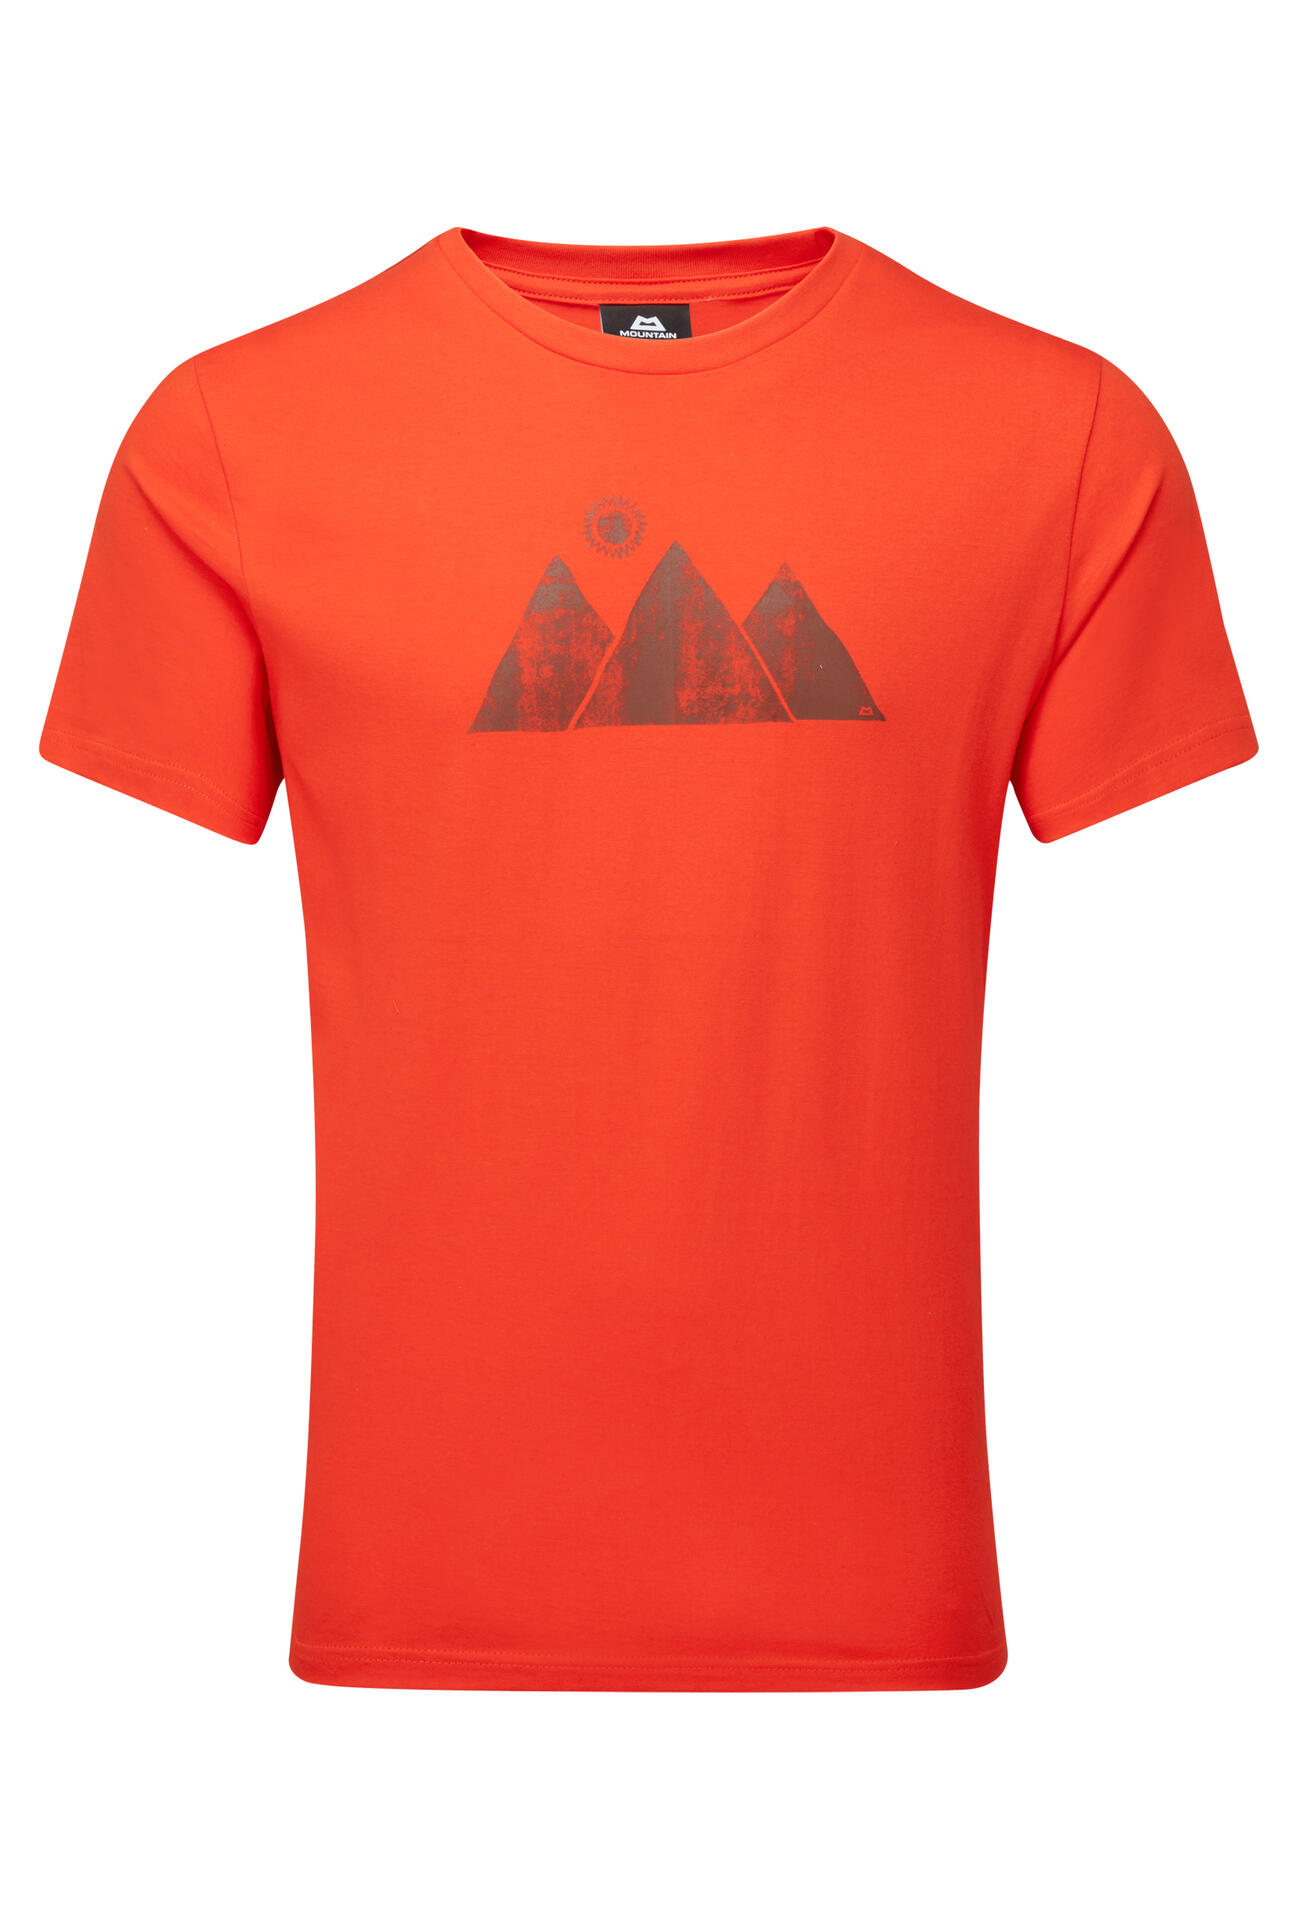 Mountain Equipment Mountain Sun Tee Men'S Barva: Cardinal Orange, Velikost: L